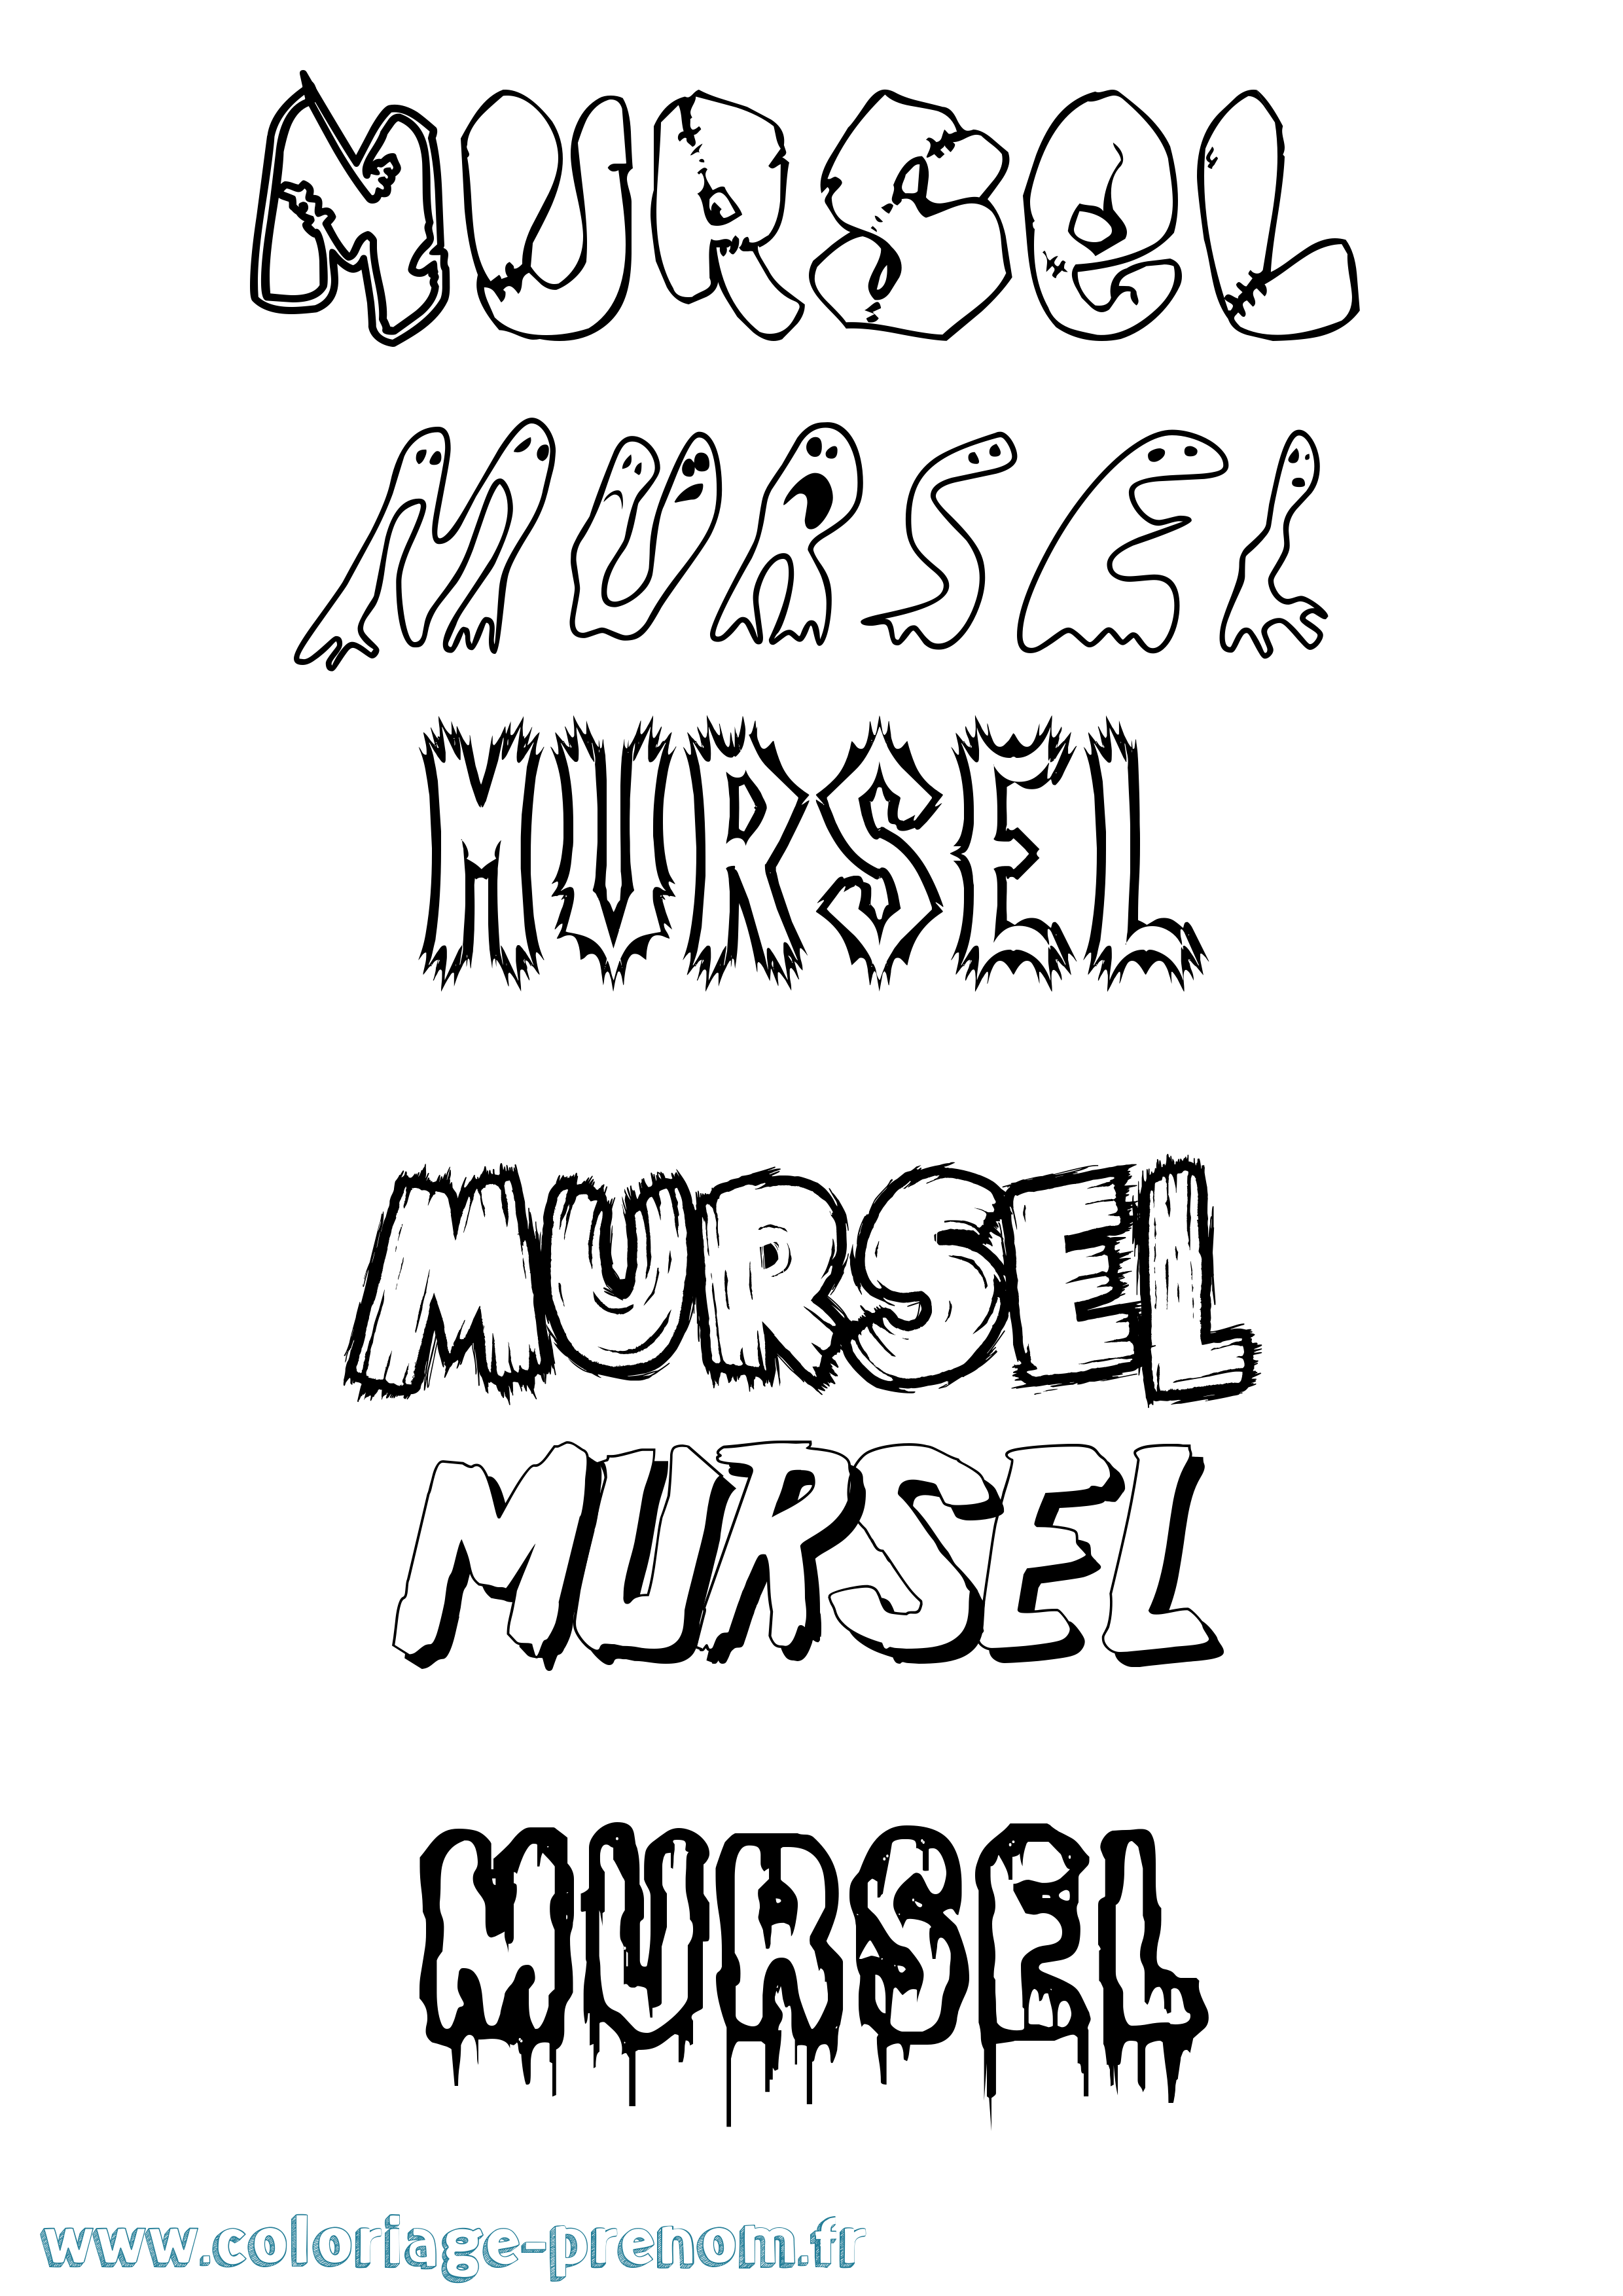 Coloriage prénom Mursel Frisson